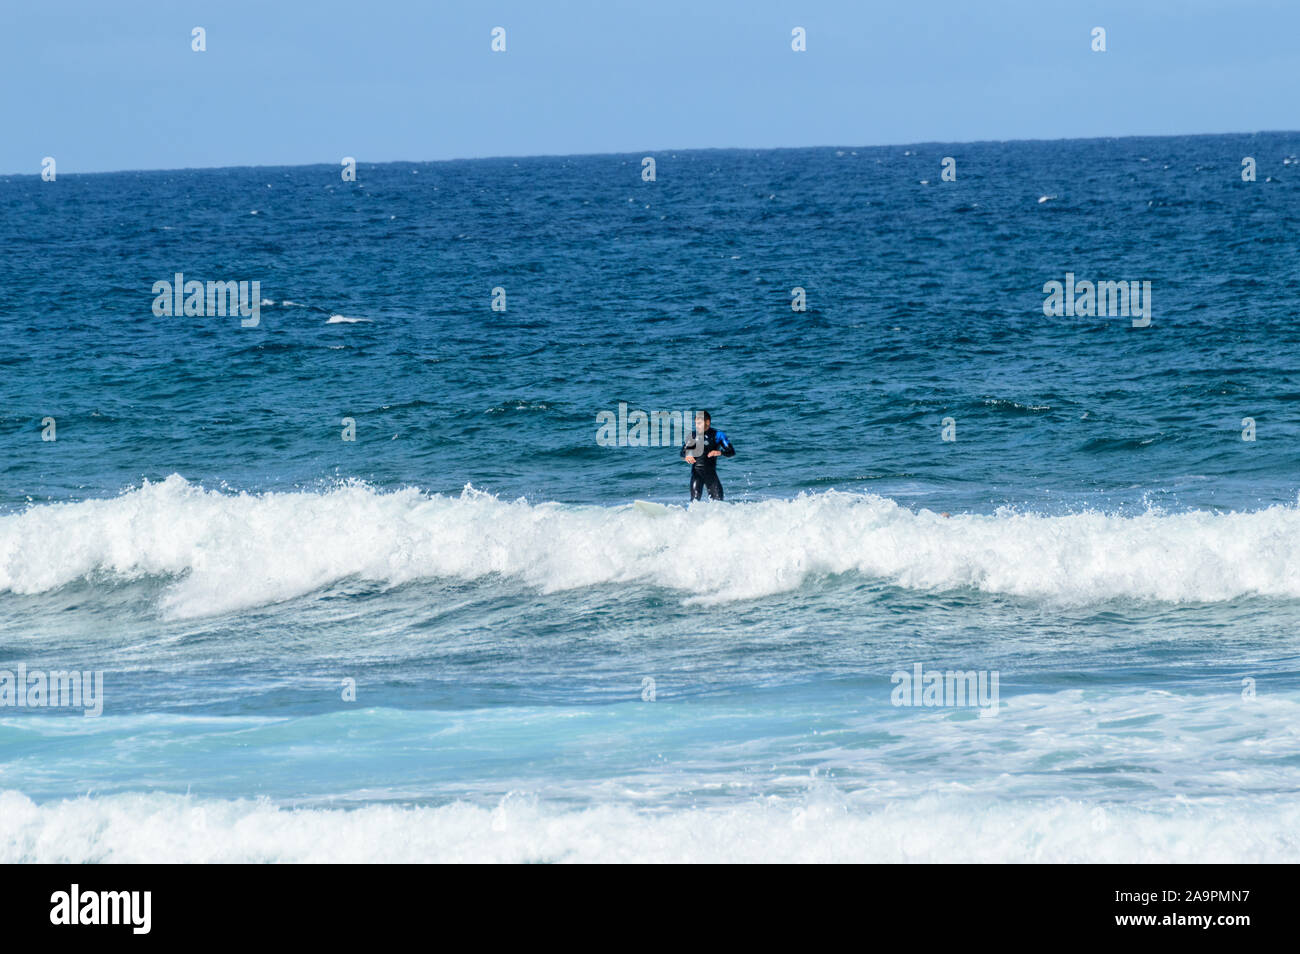 Hispanic Brunette Man Catching Waves On Las Americas Beach. April 11, 2019. Santa Cruz De Tenerife Spain Africa. Travel Tourism Street Photography. Stock Photo